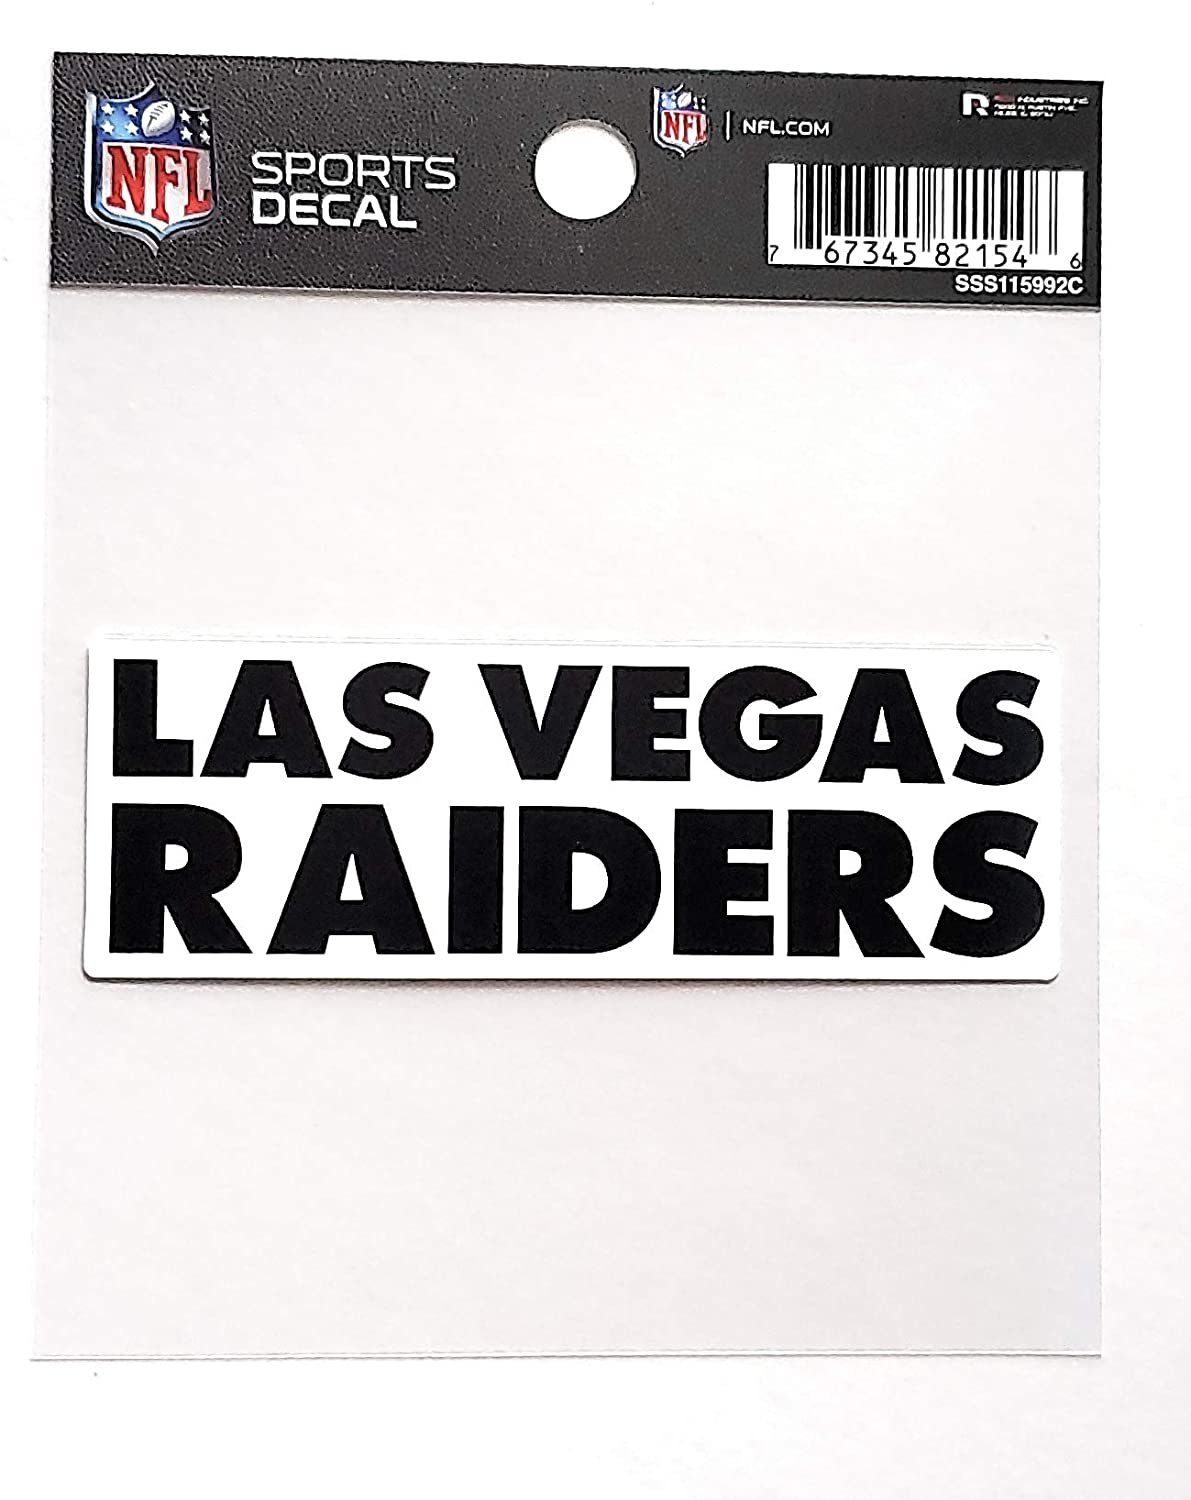 Las Vegas Raiders 4x4 Inch Die Cut Decal Sticker, Wordmark Logo, Clear Backing